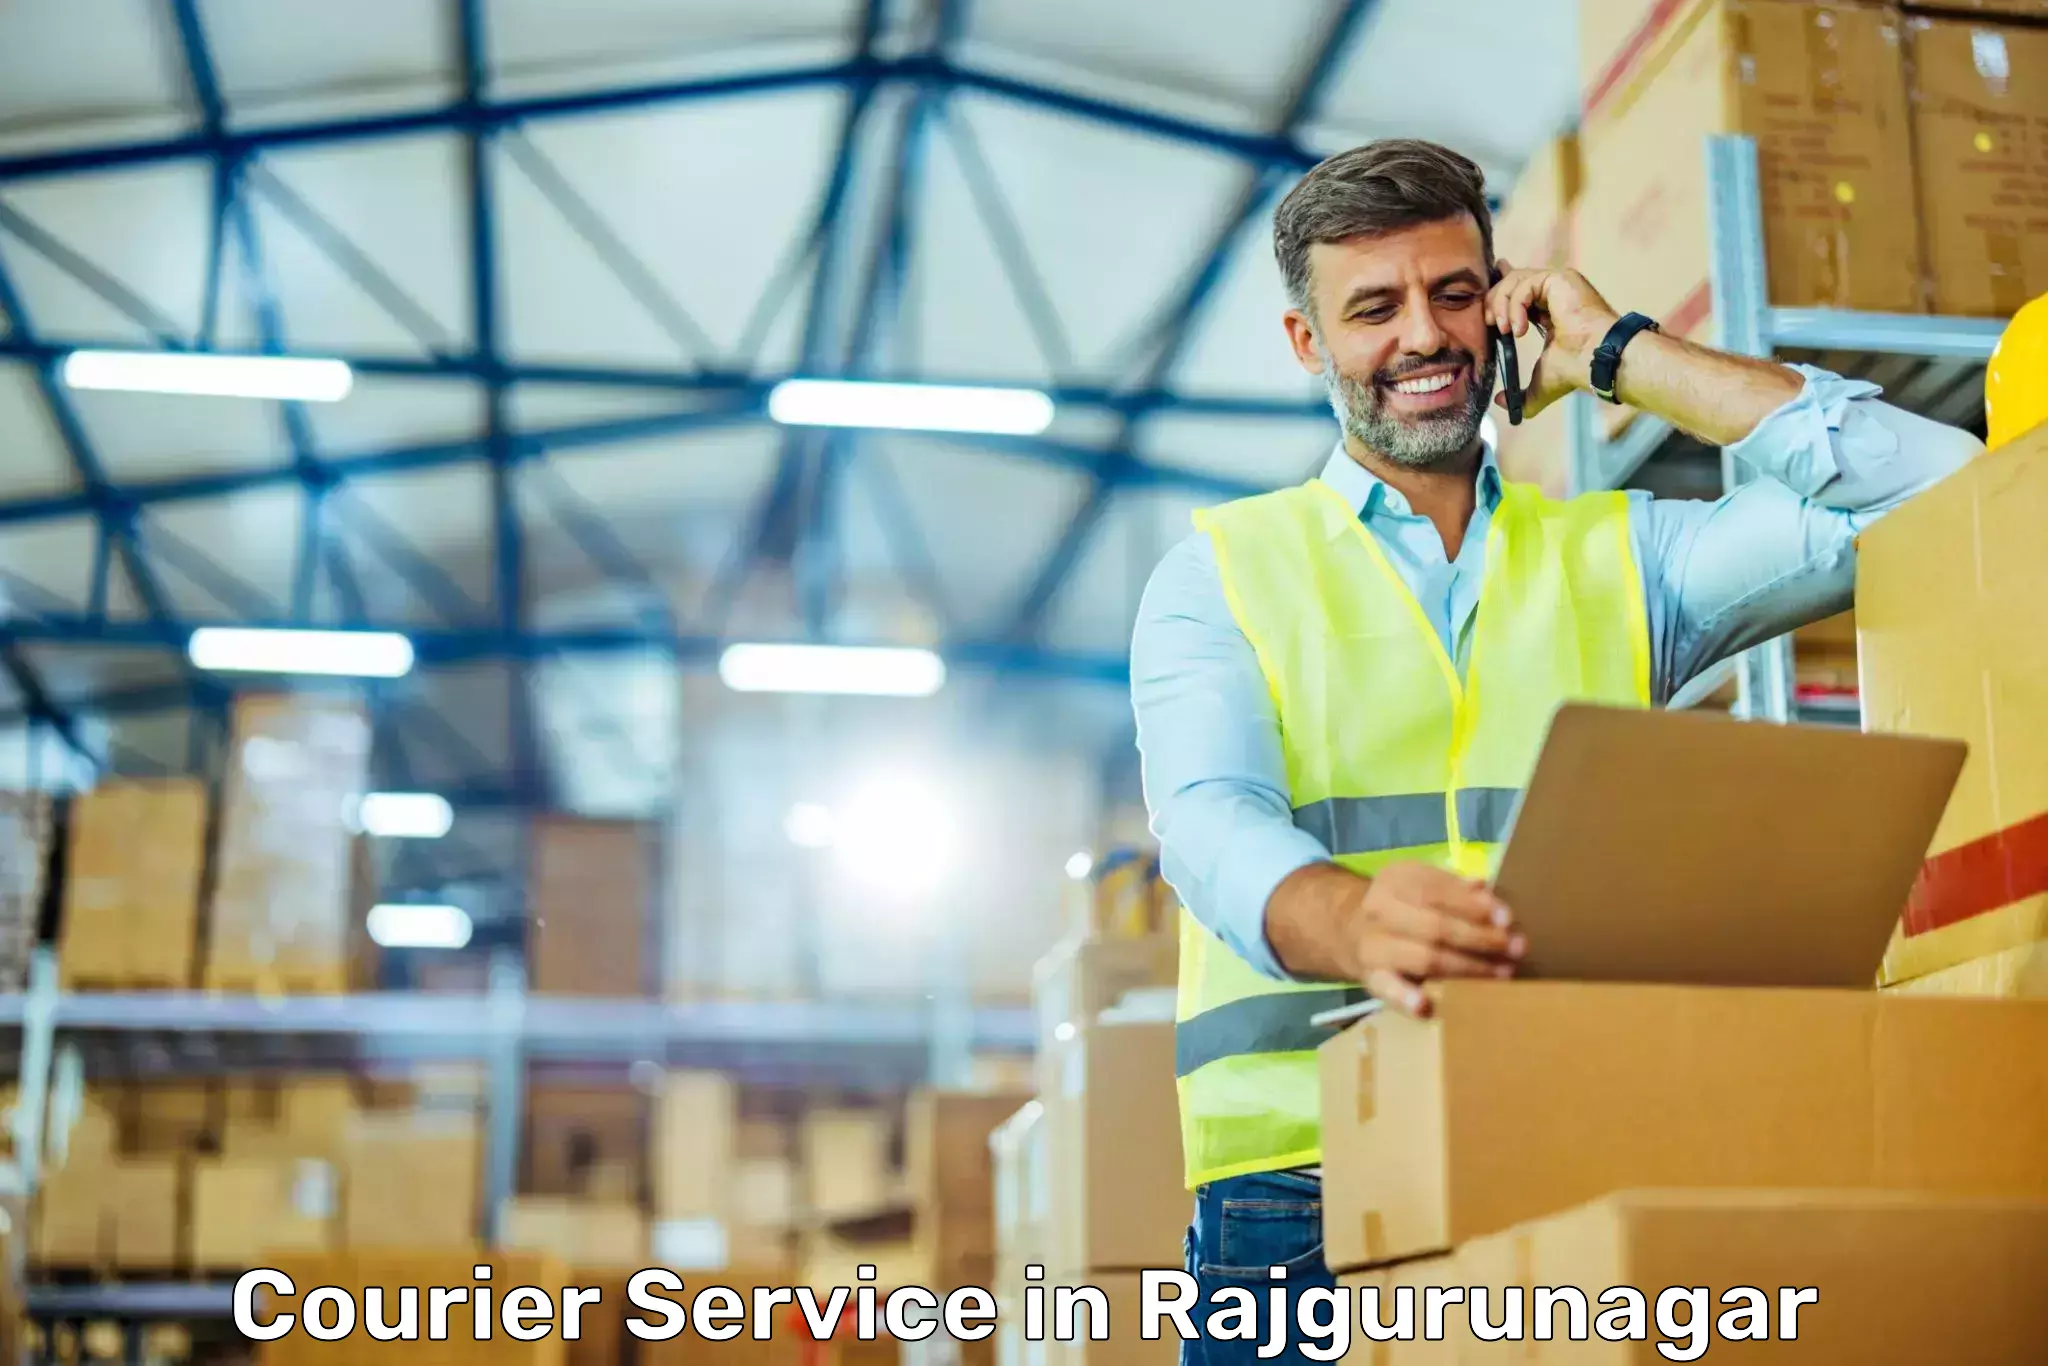 Fastest parcel delivery in Rajgurunagar